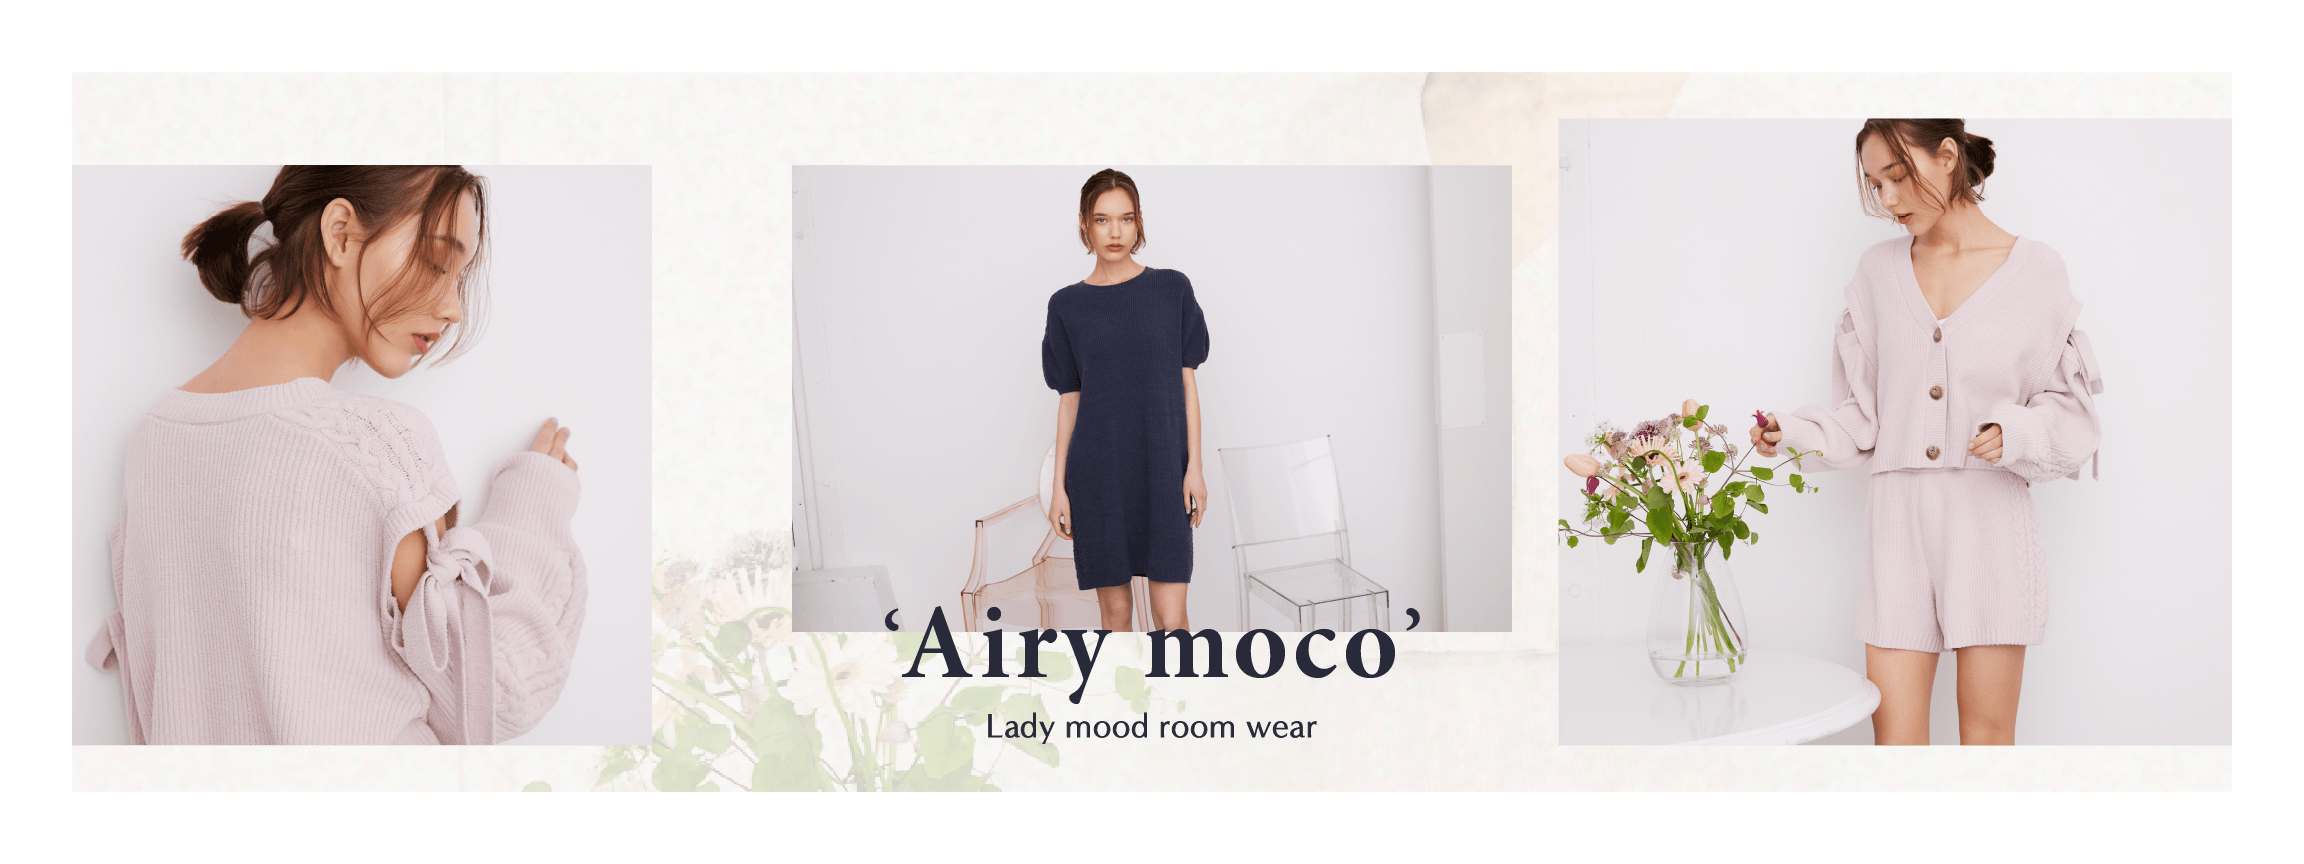 Airy moco lady mood room wear